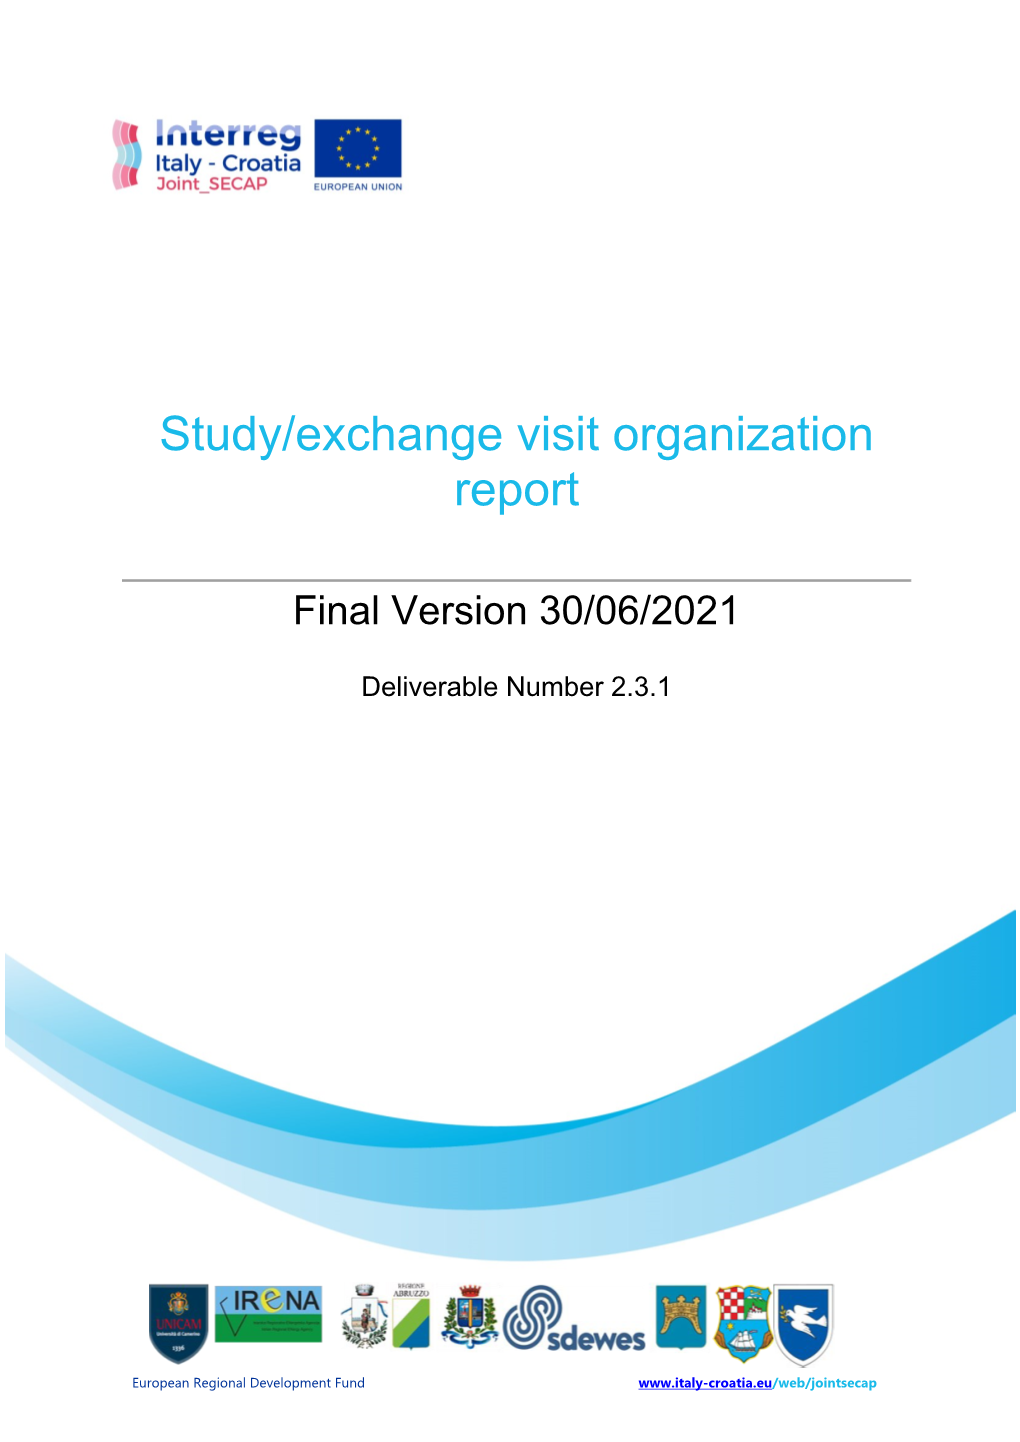 Study/Exchange Visit Organization Report